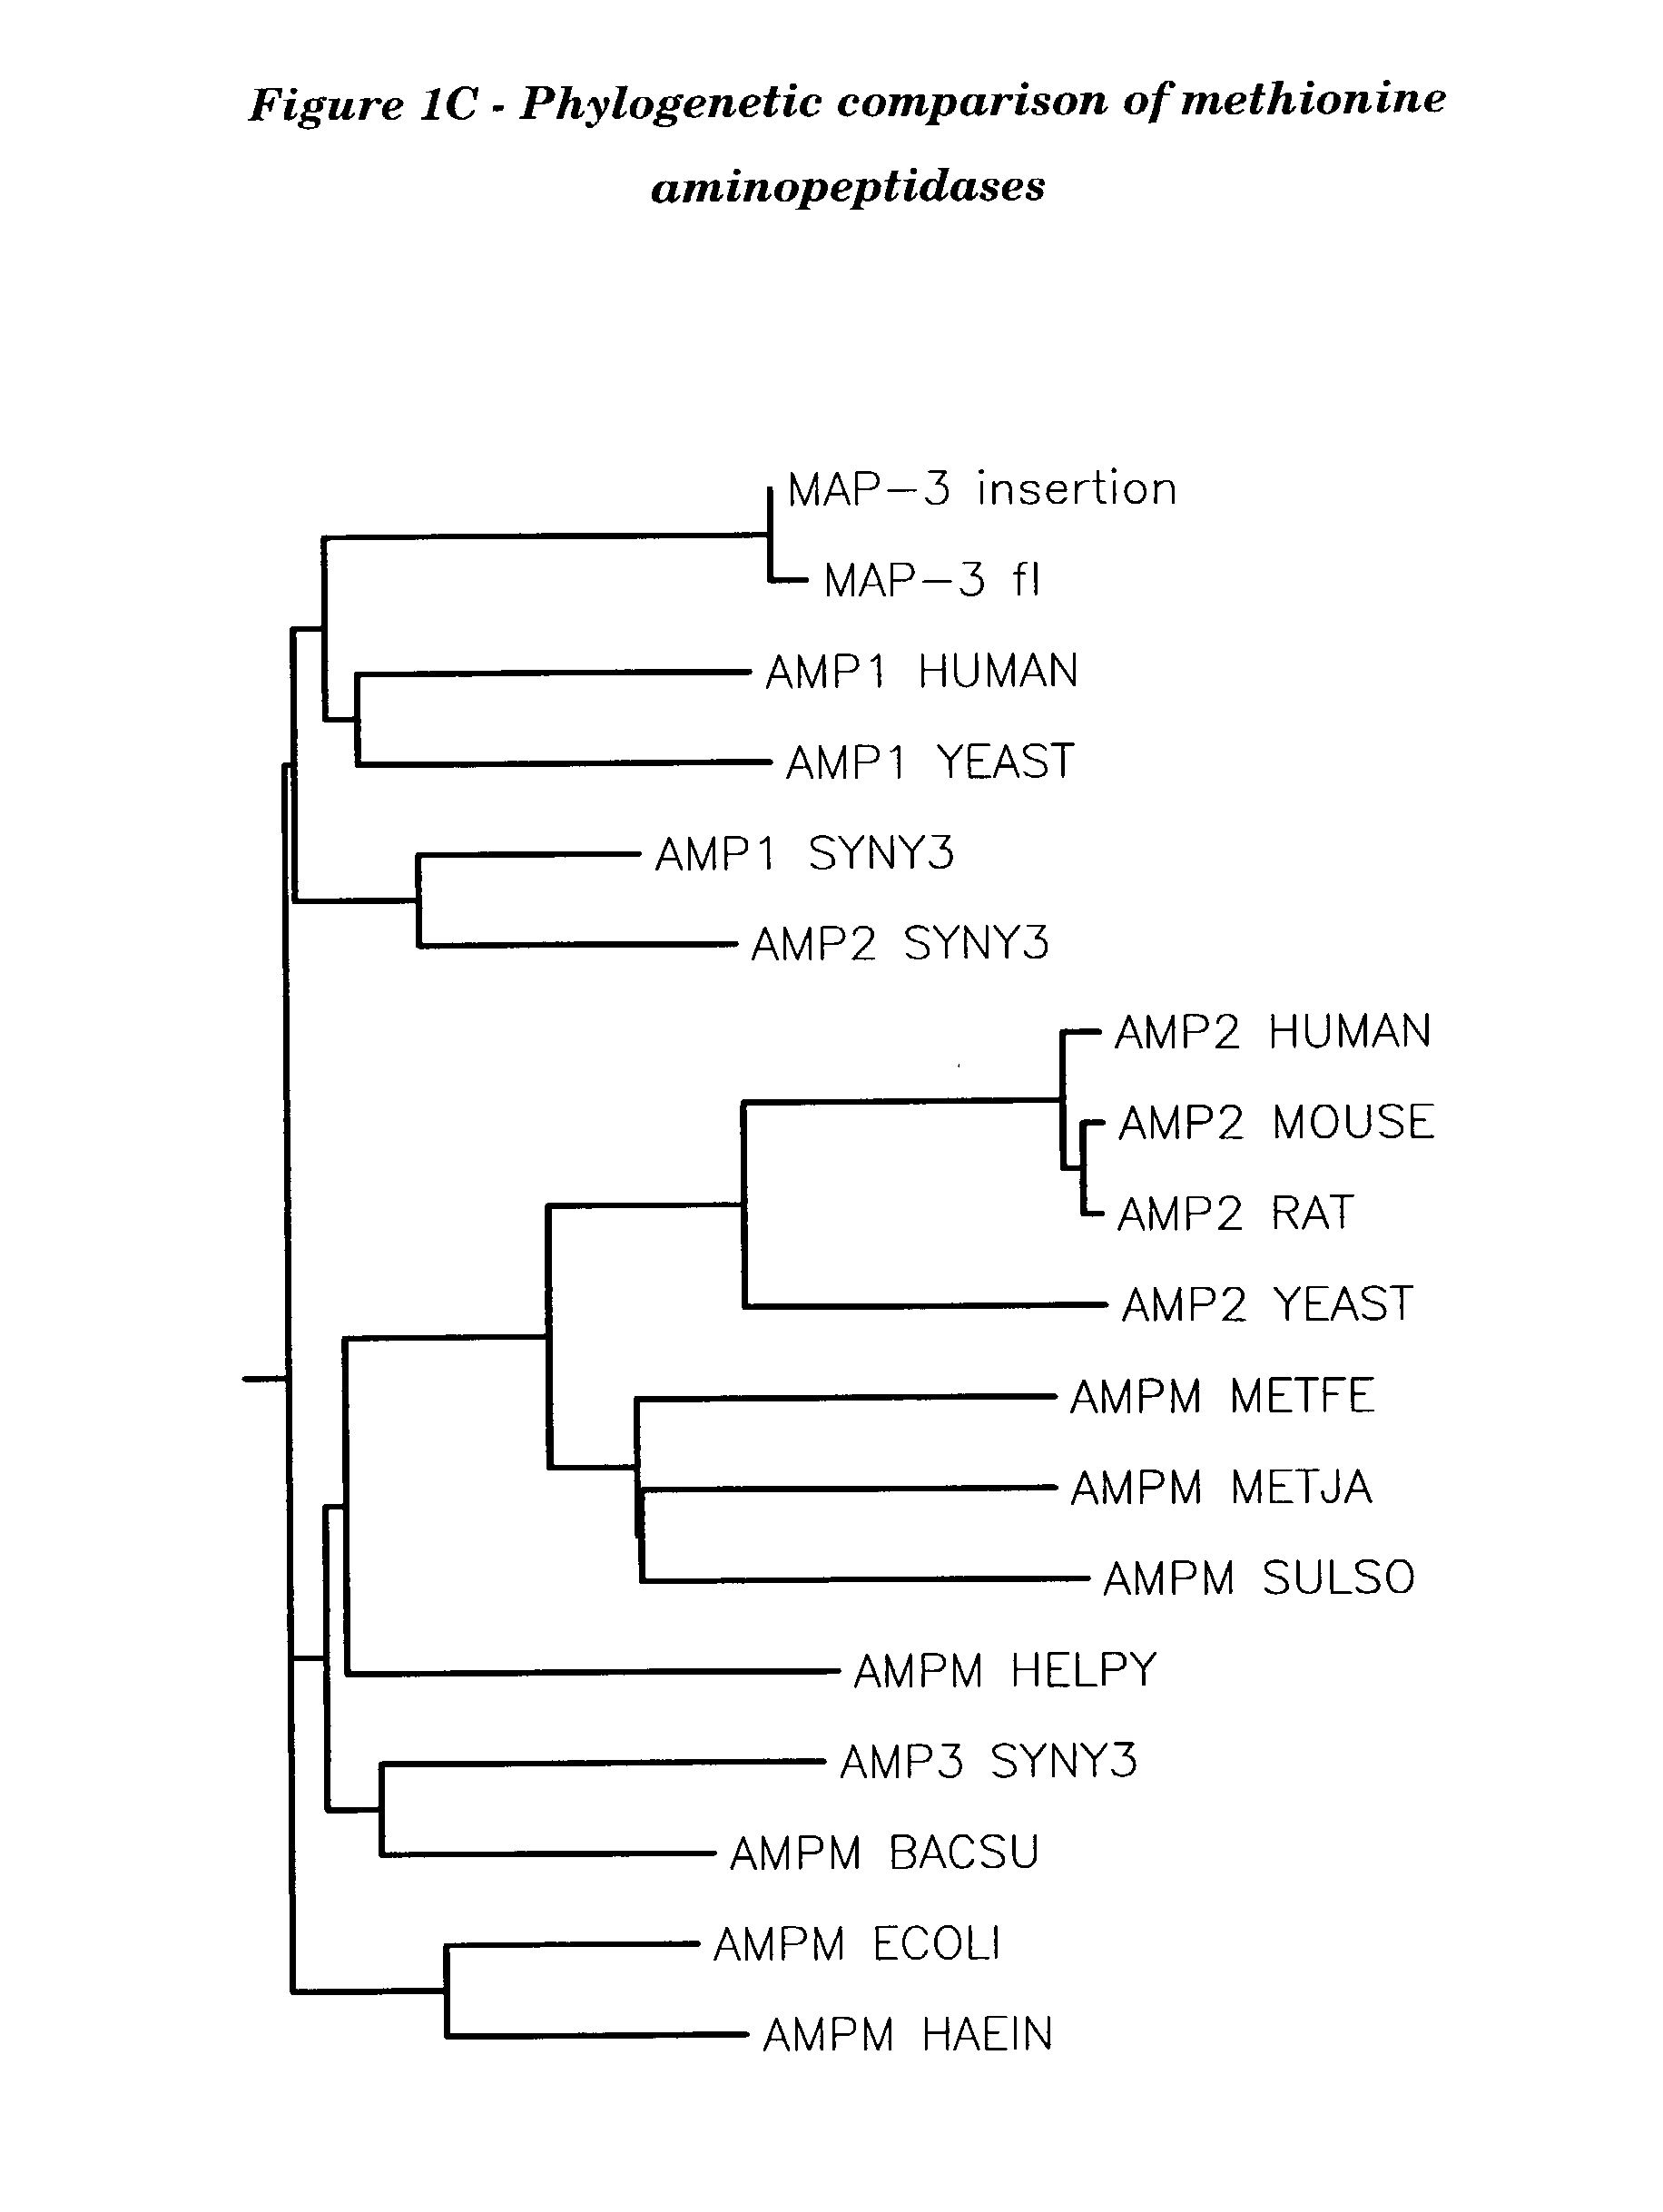 Human methionine aminopeptidase type 3